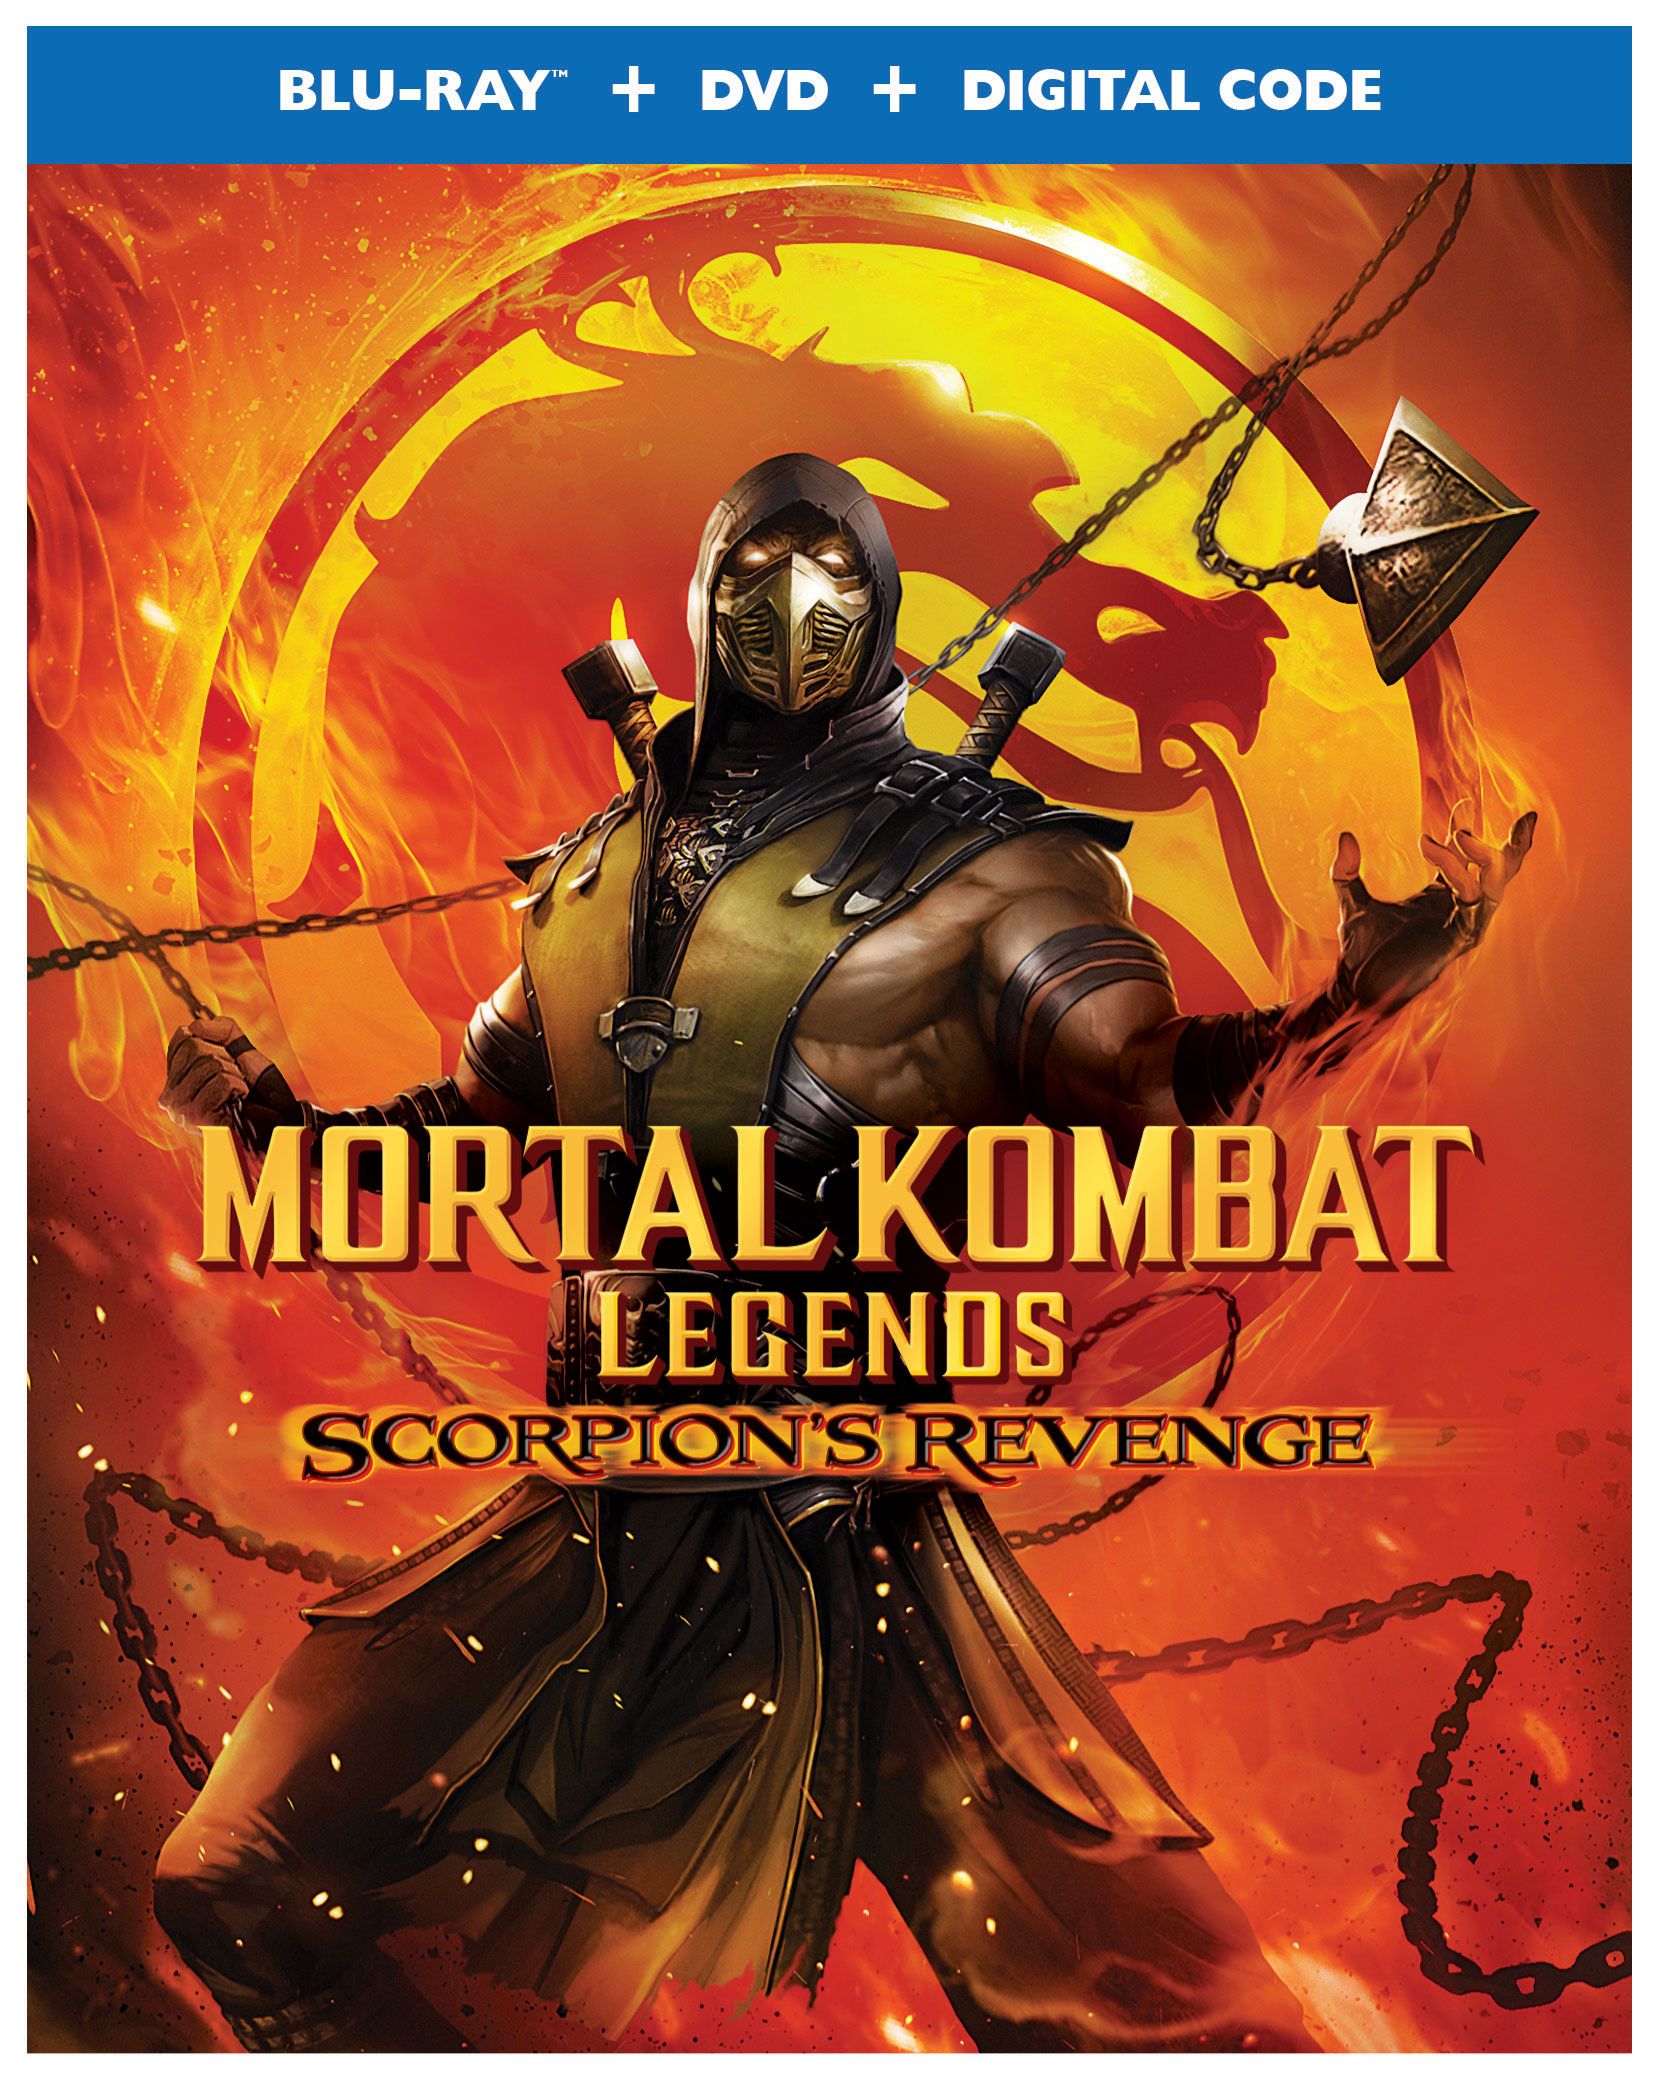 Mortal Kombat Legends: Scorpion's Revenge blu-ray